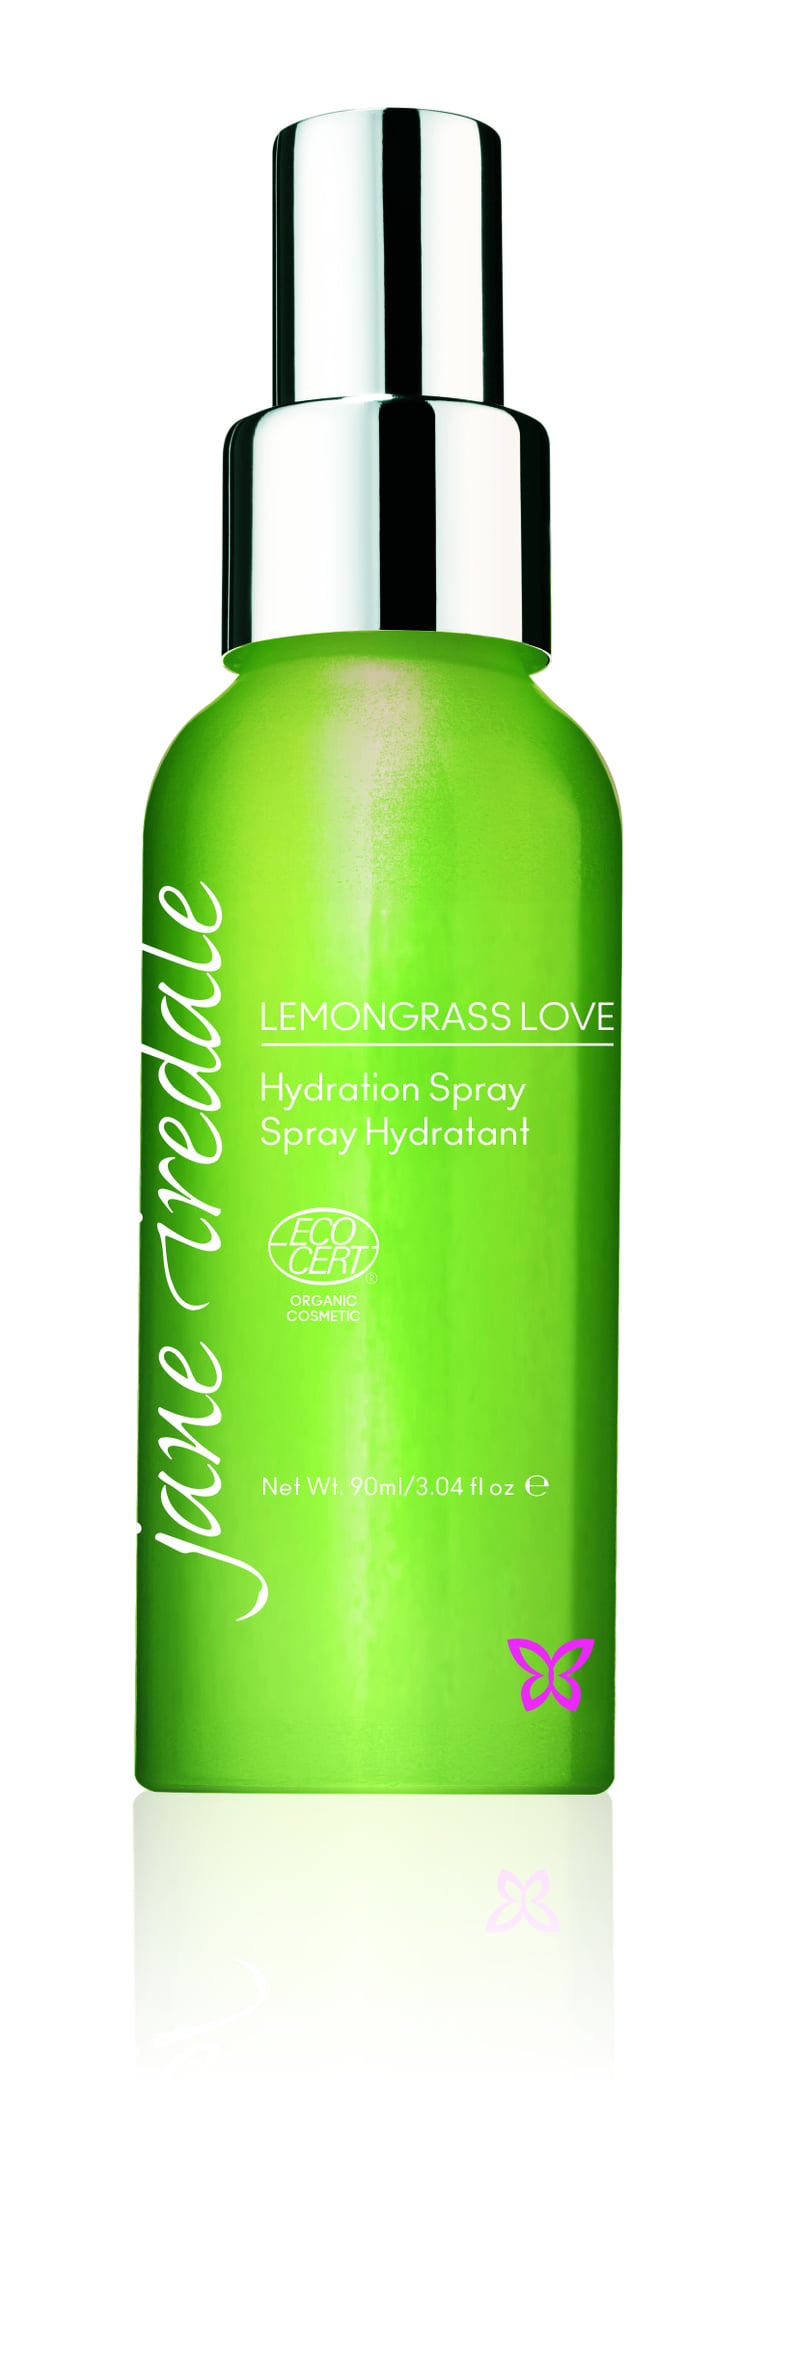 Jane Iredale Lemongrass Love Hydration Spray